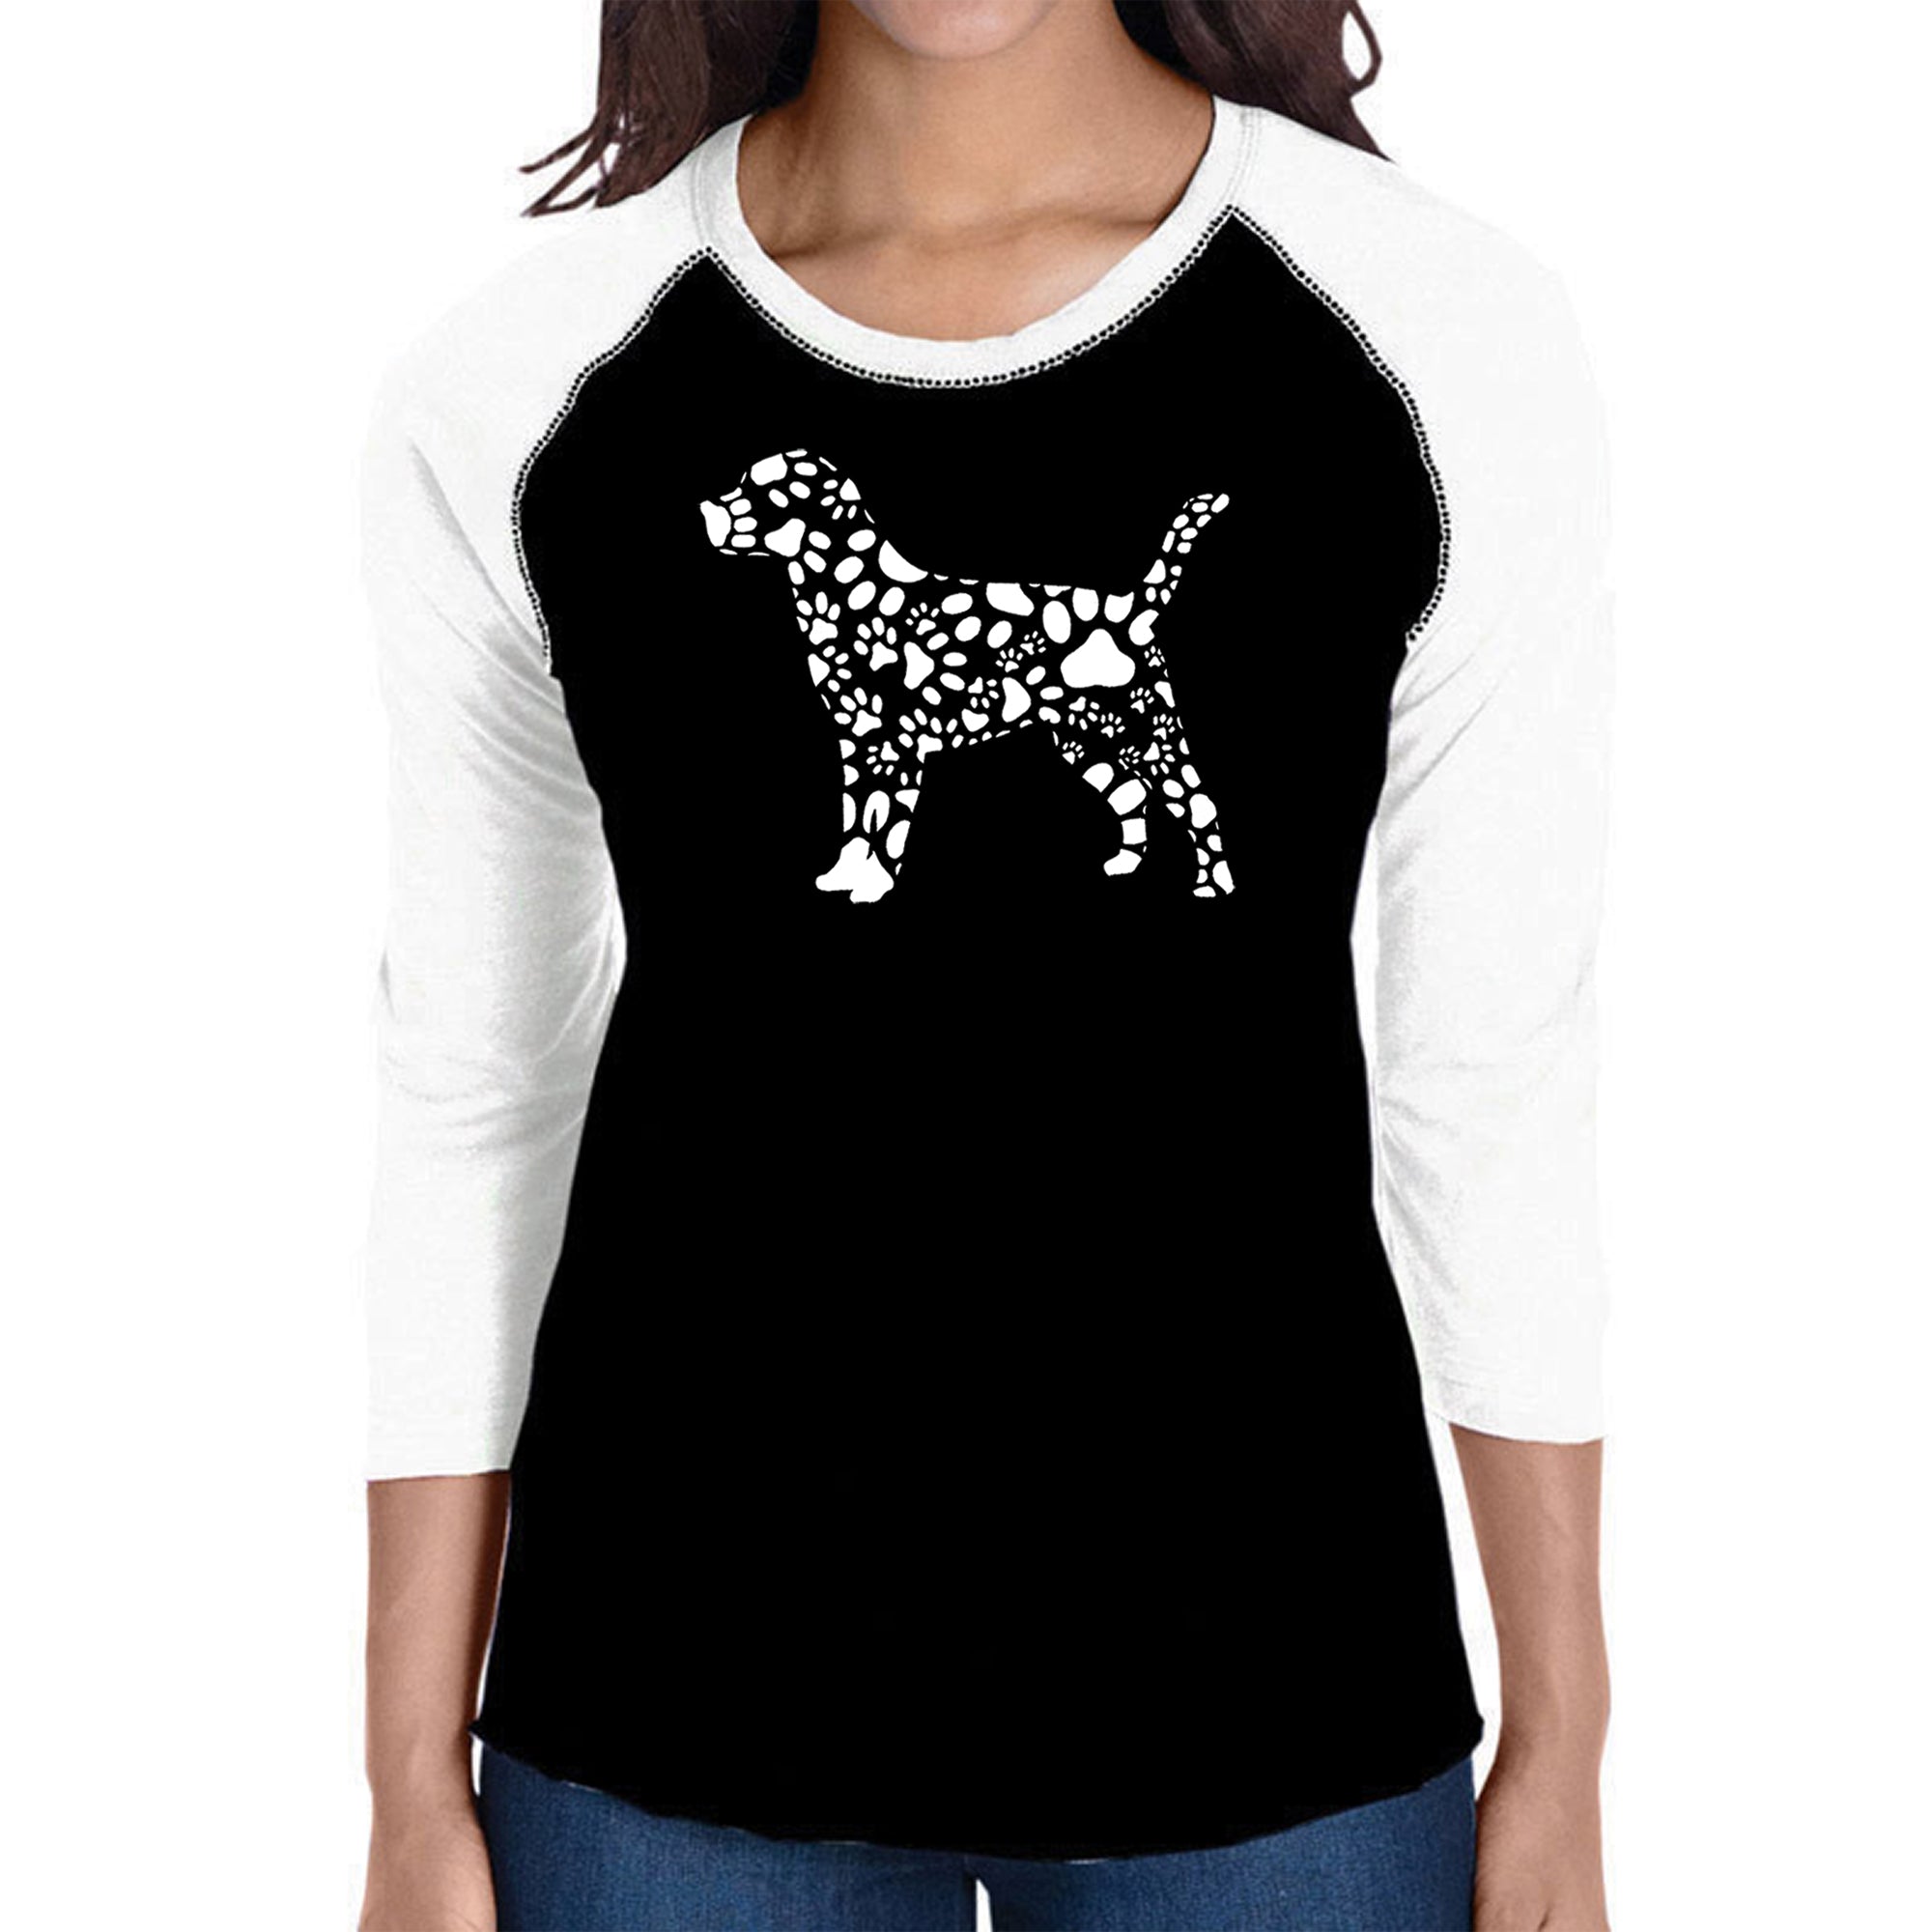 Dog Paw Prints - Women's Raglan Word Art T-Shirt - Black/White - Medium